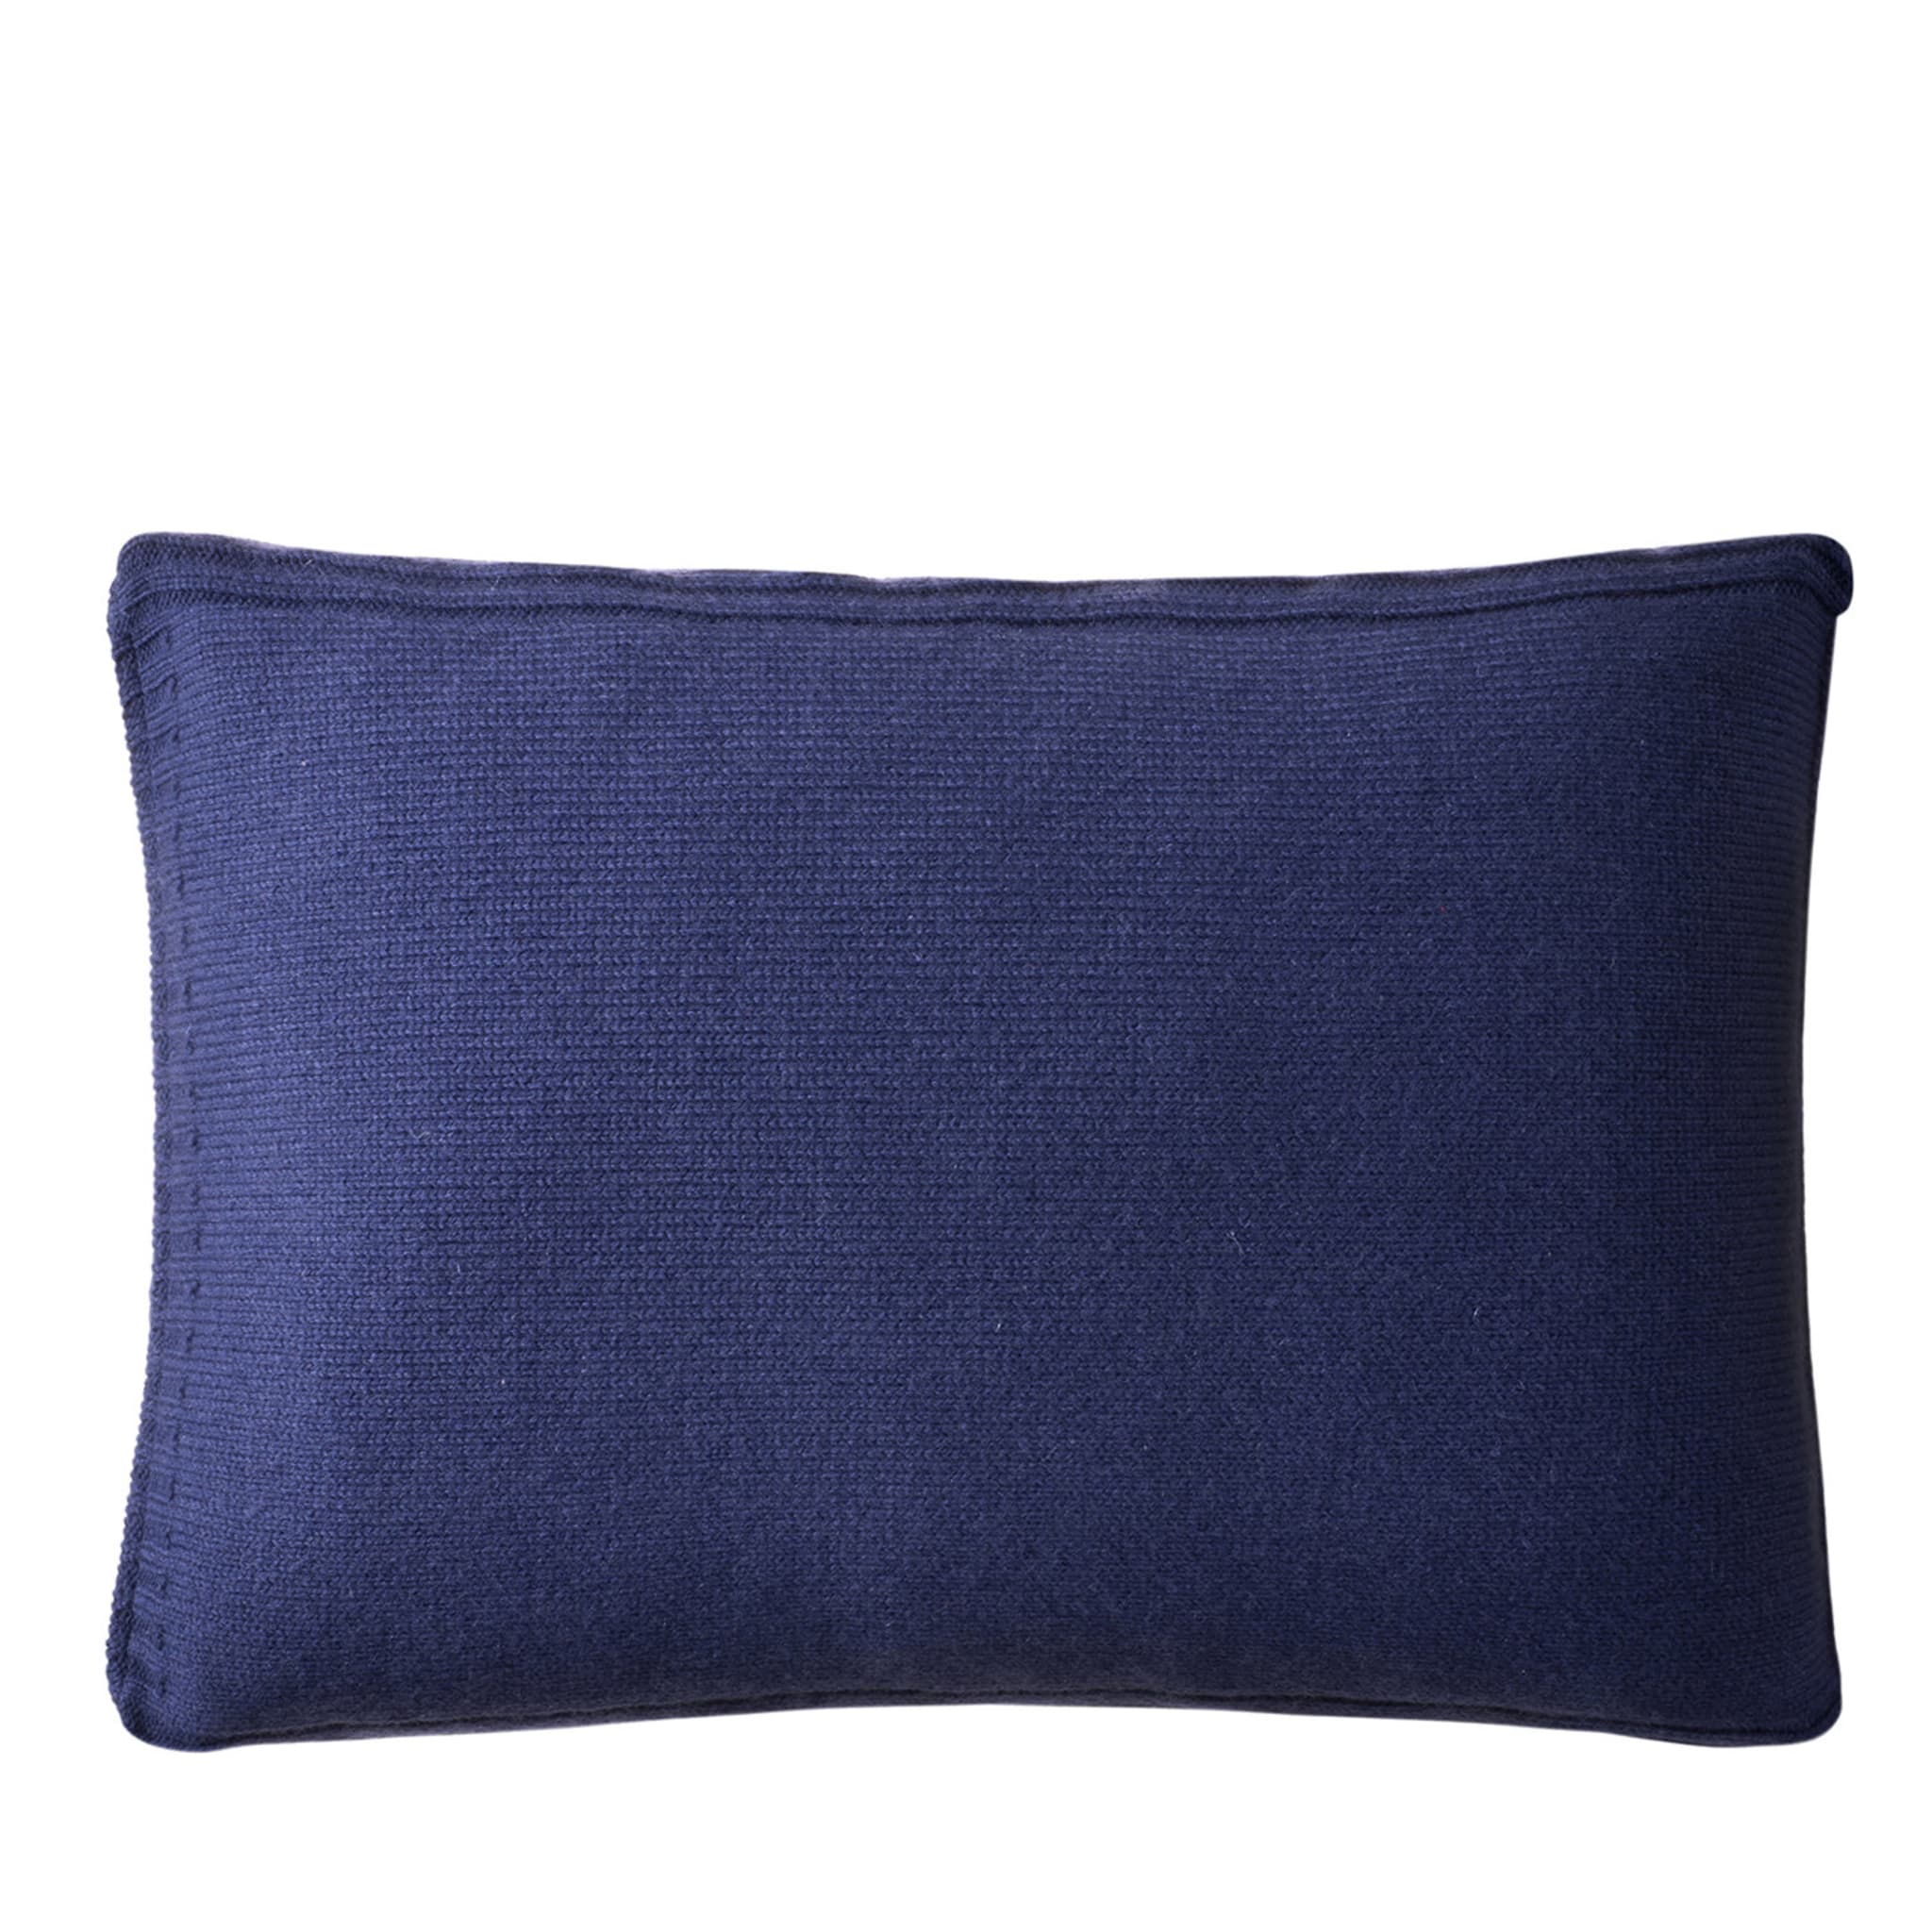 Blue Rectangular Cushion - Alternative view 1